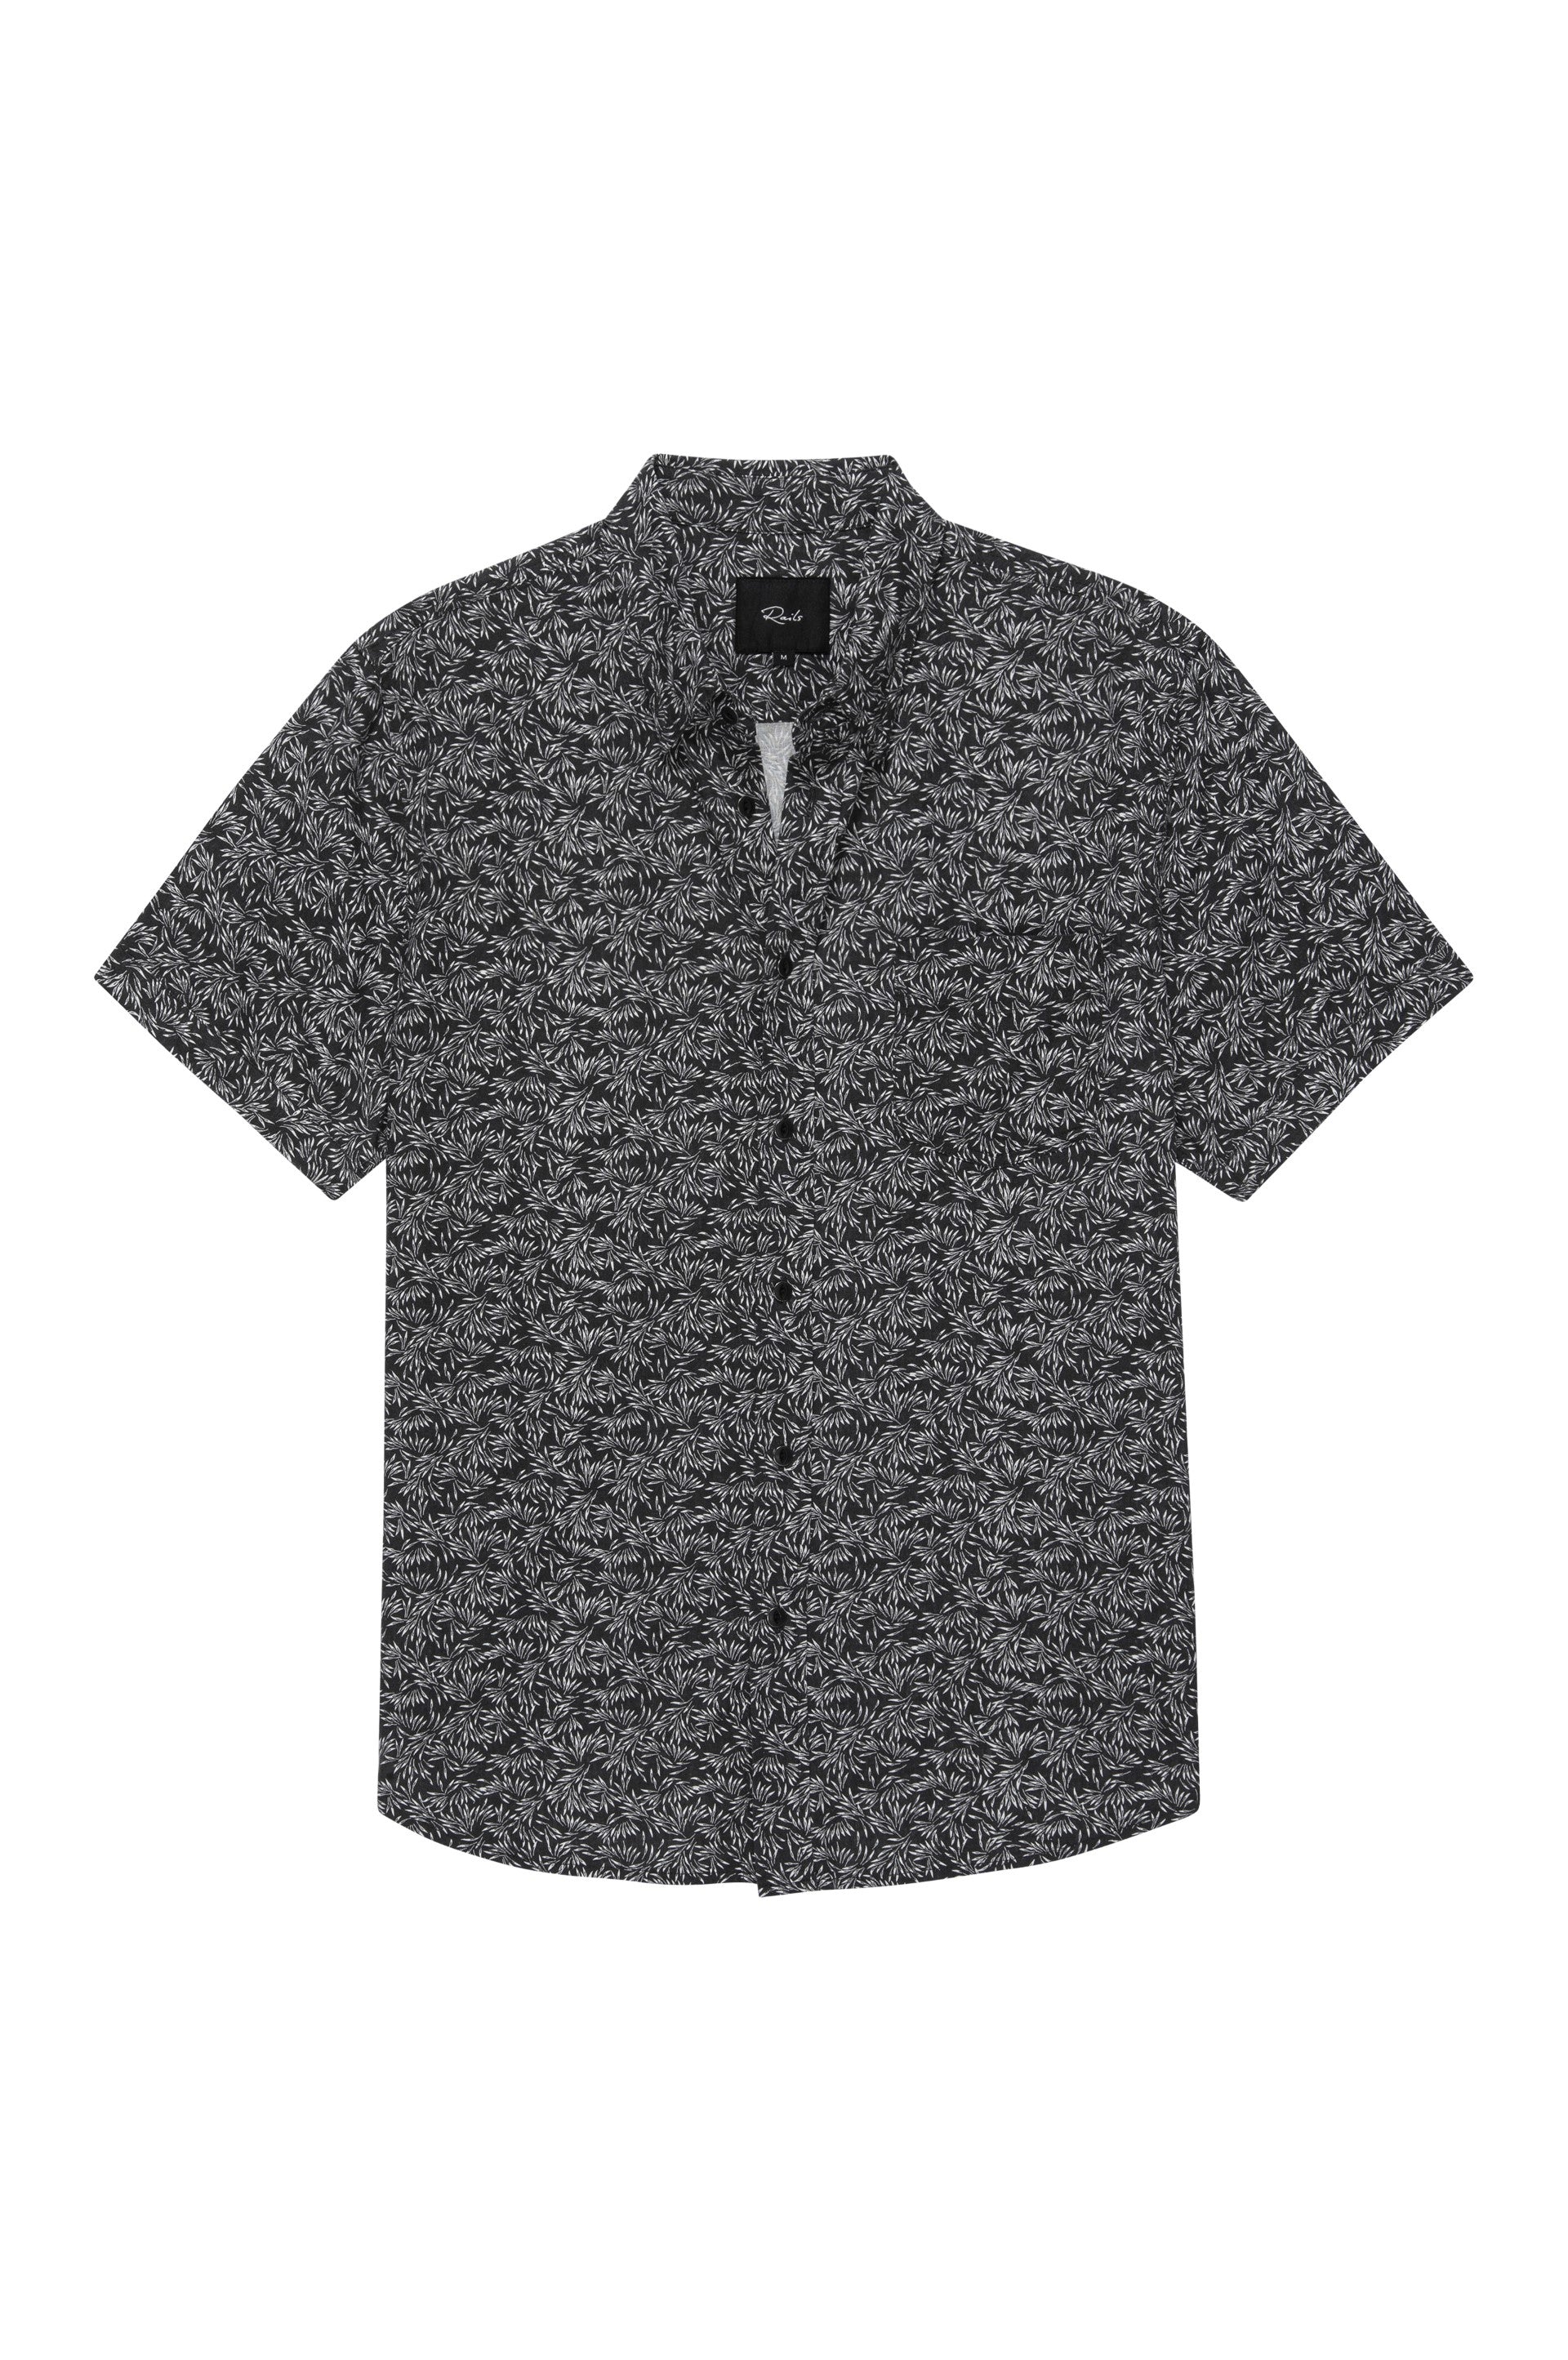 Carson Printed Short Sleeve Button Shirt - Crop Circle Crop Circle